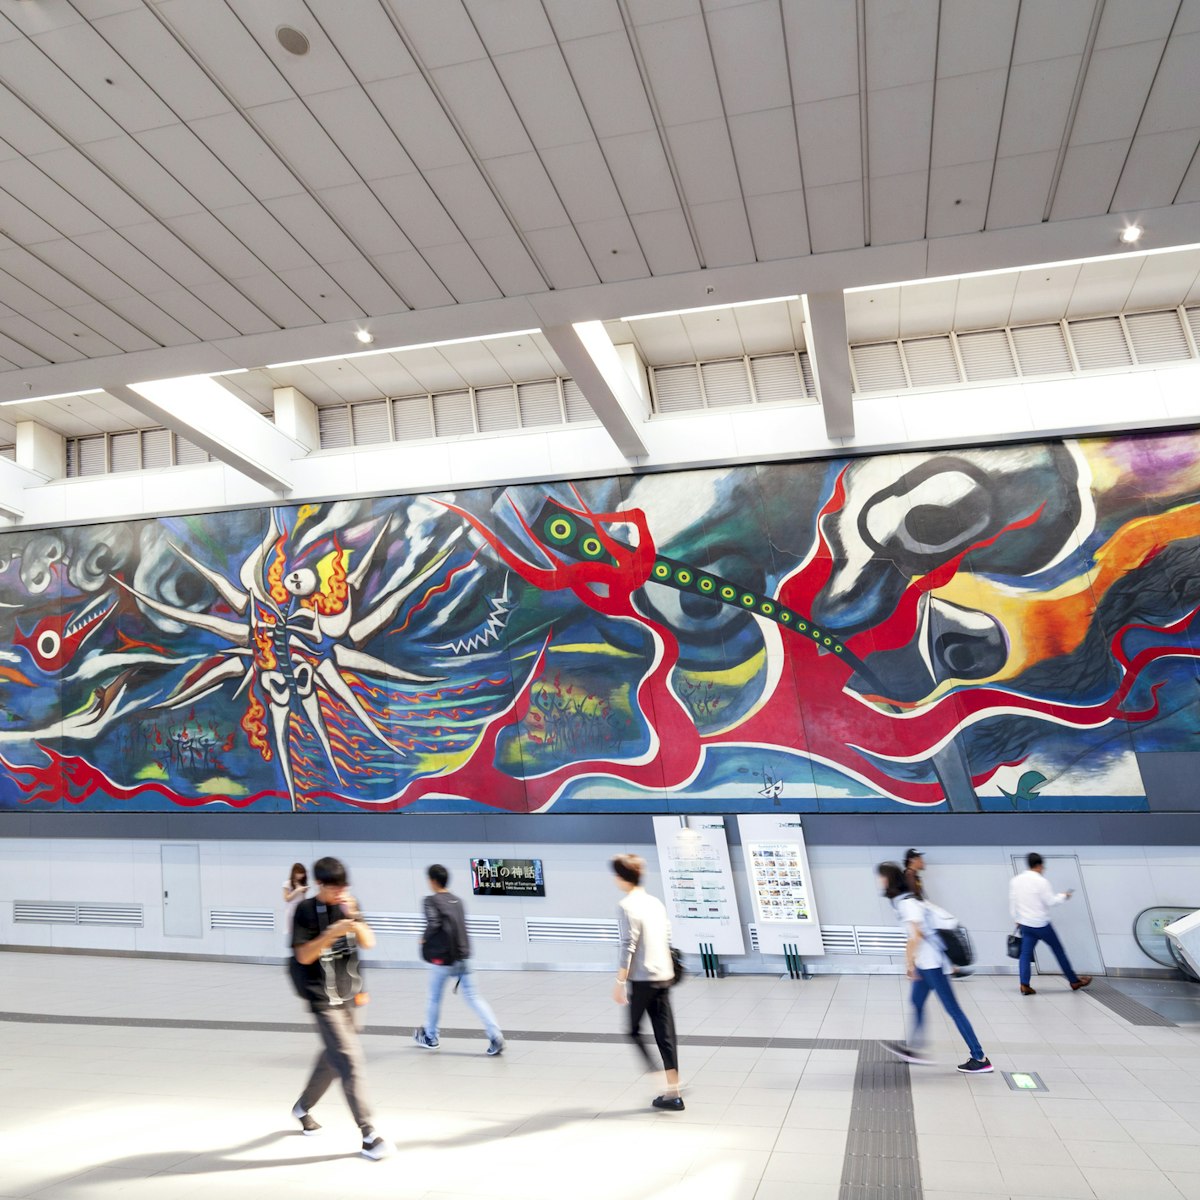 Shibuya, Tokyo, Japan-September 18, 2018: Myth of Tomorrow: Myth of Tomorrow is a wall painting painted by Taro Okamoto in Shibuya station.
1045197788
myth of tomorrow